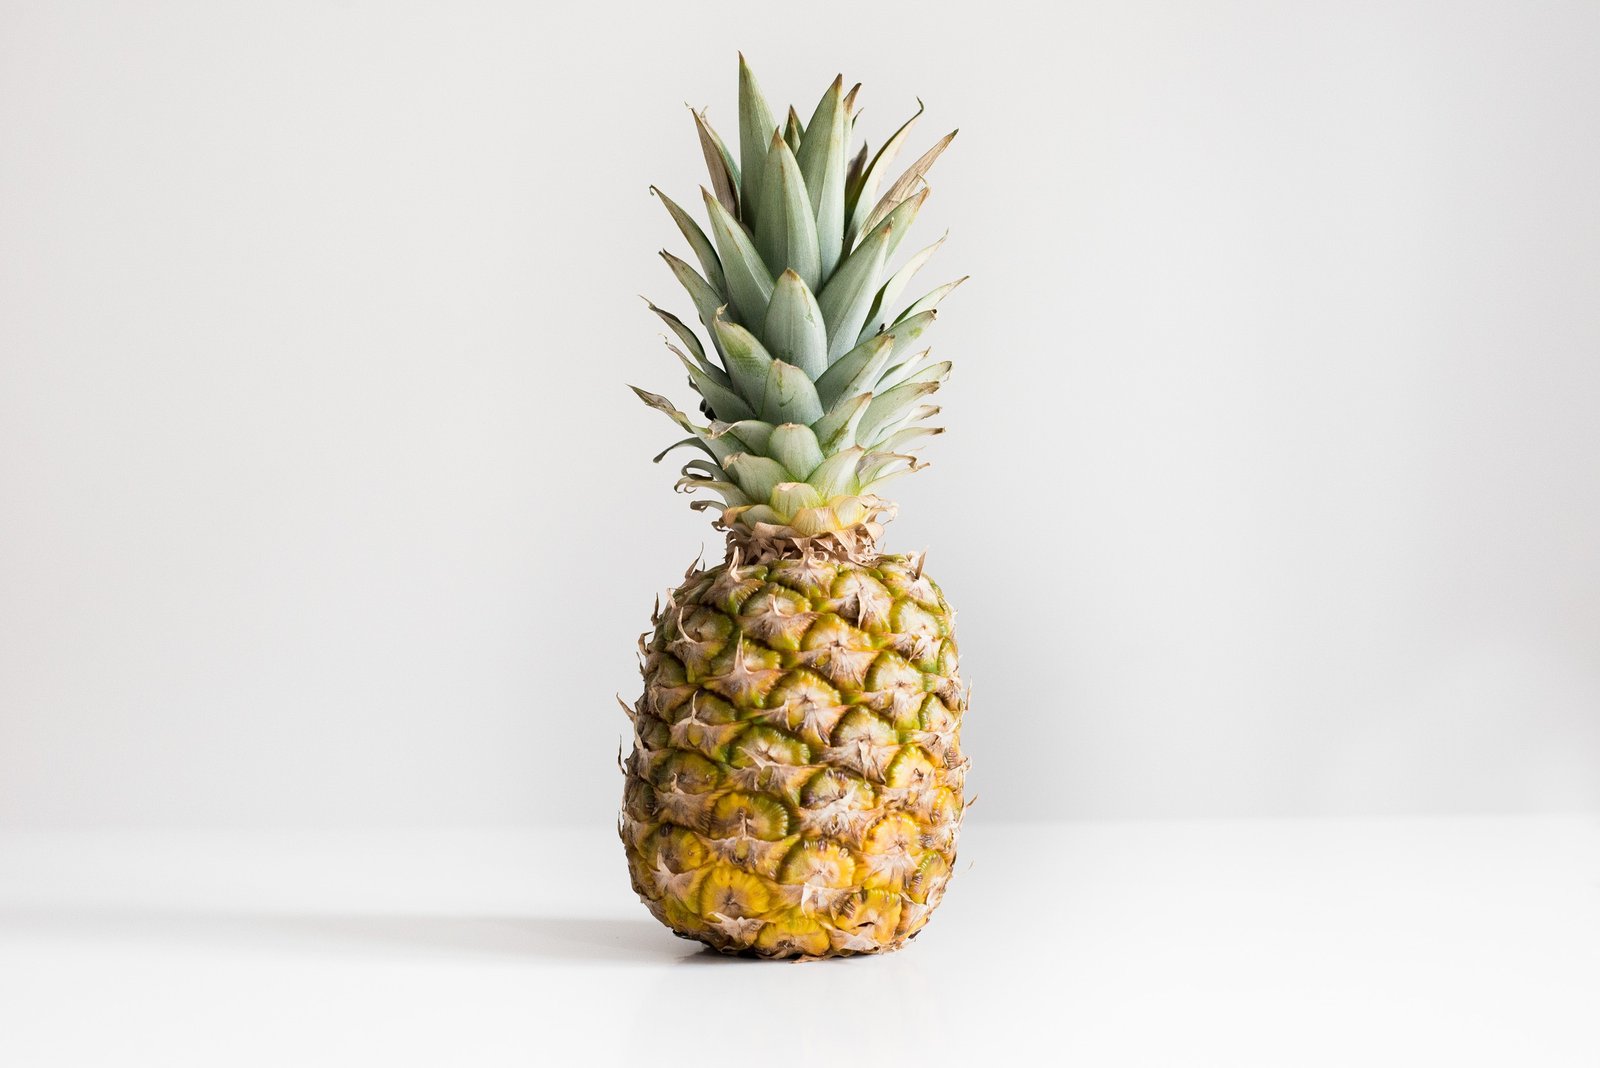 Pineapple Story